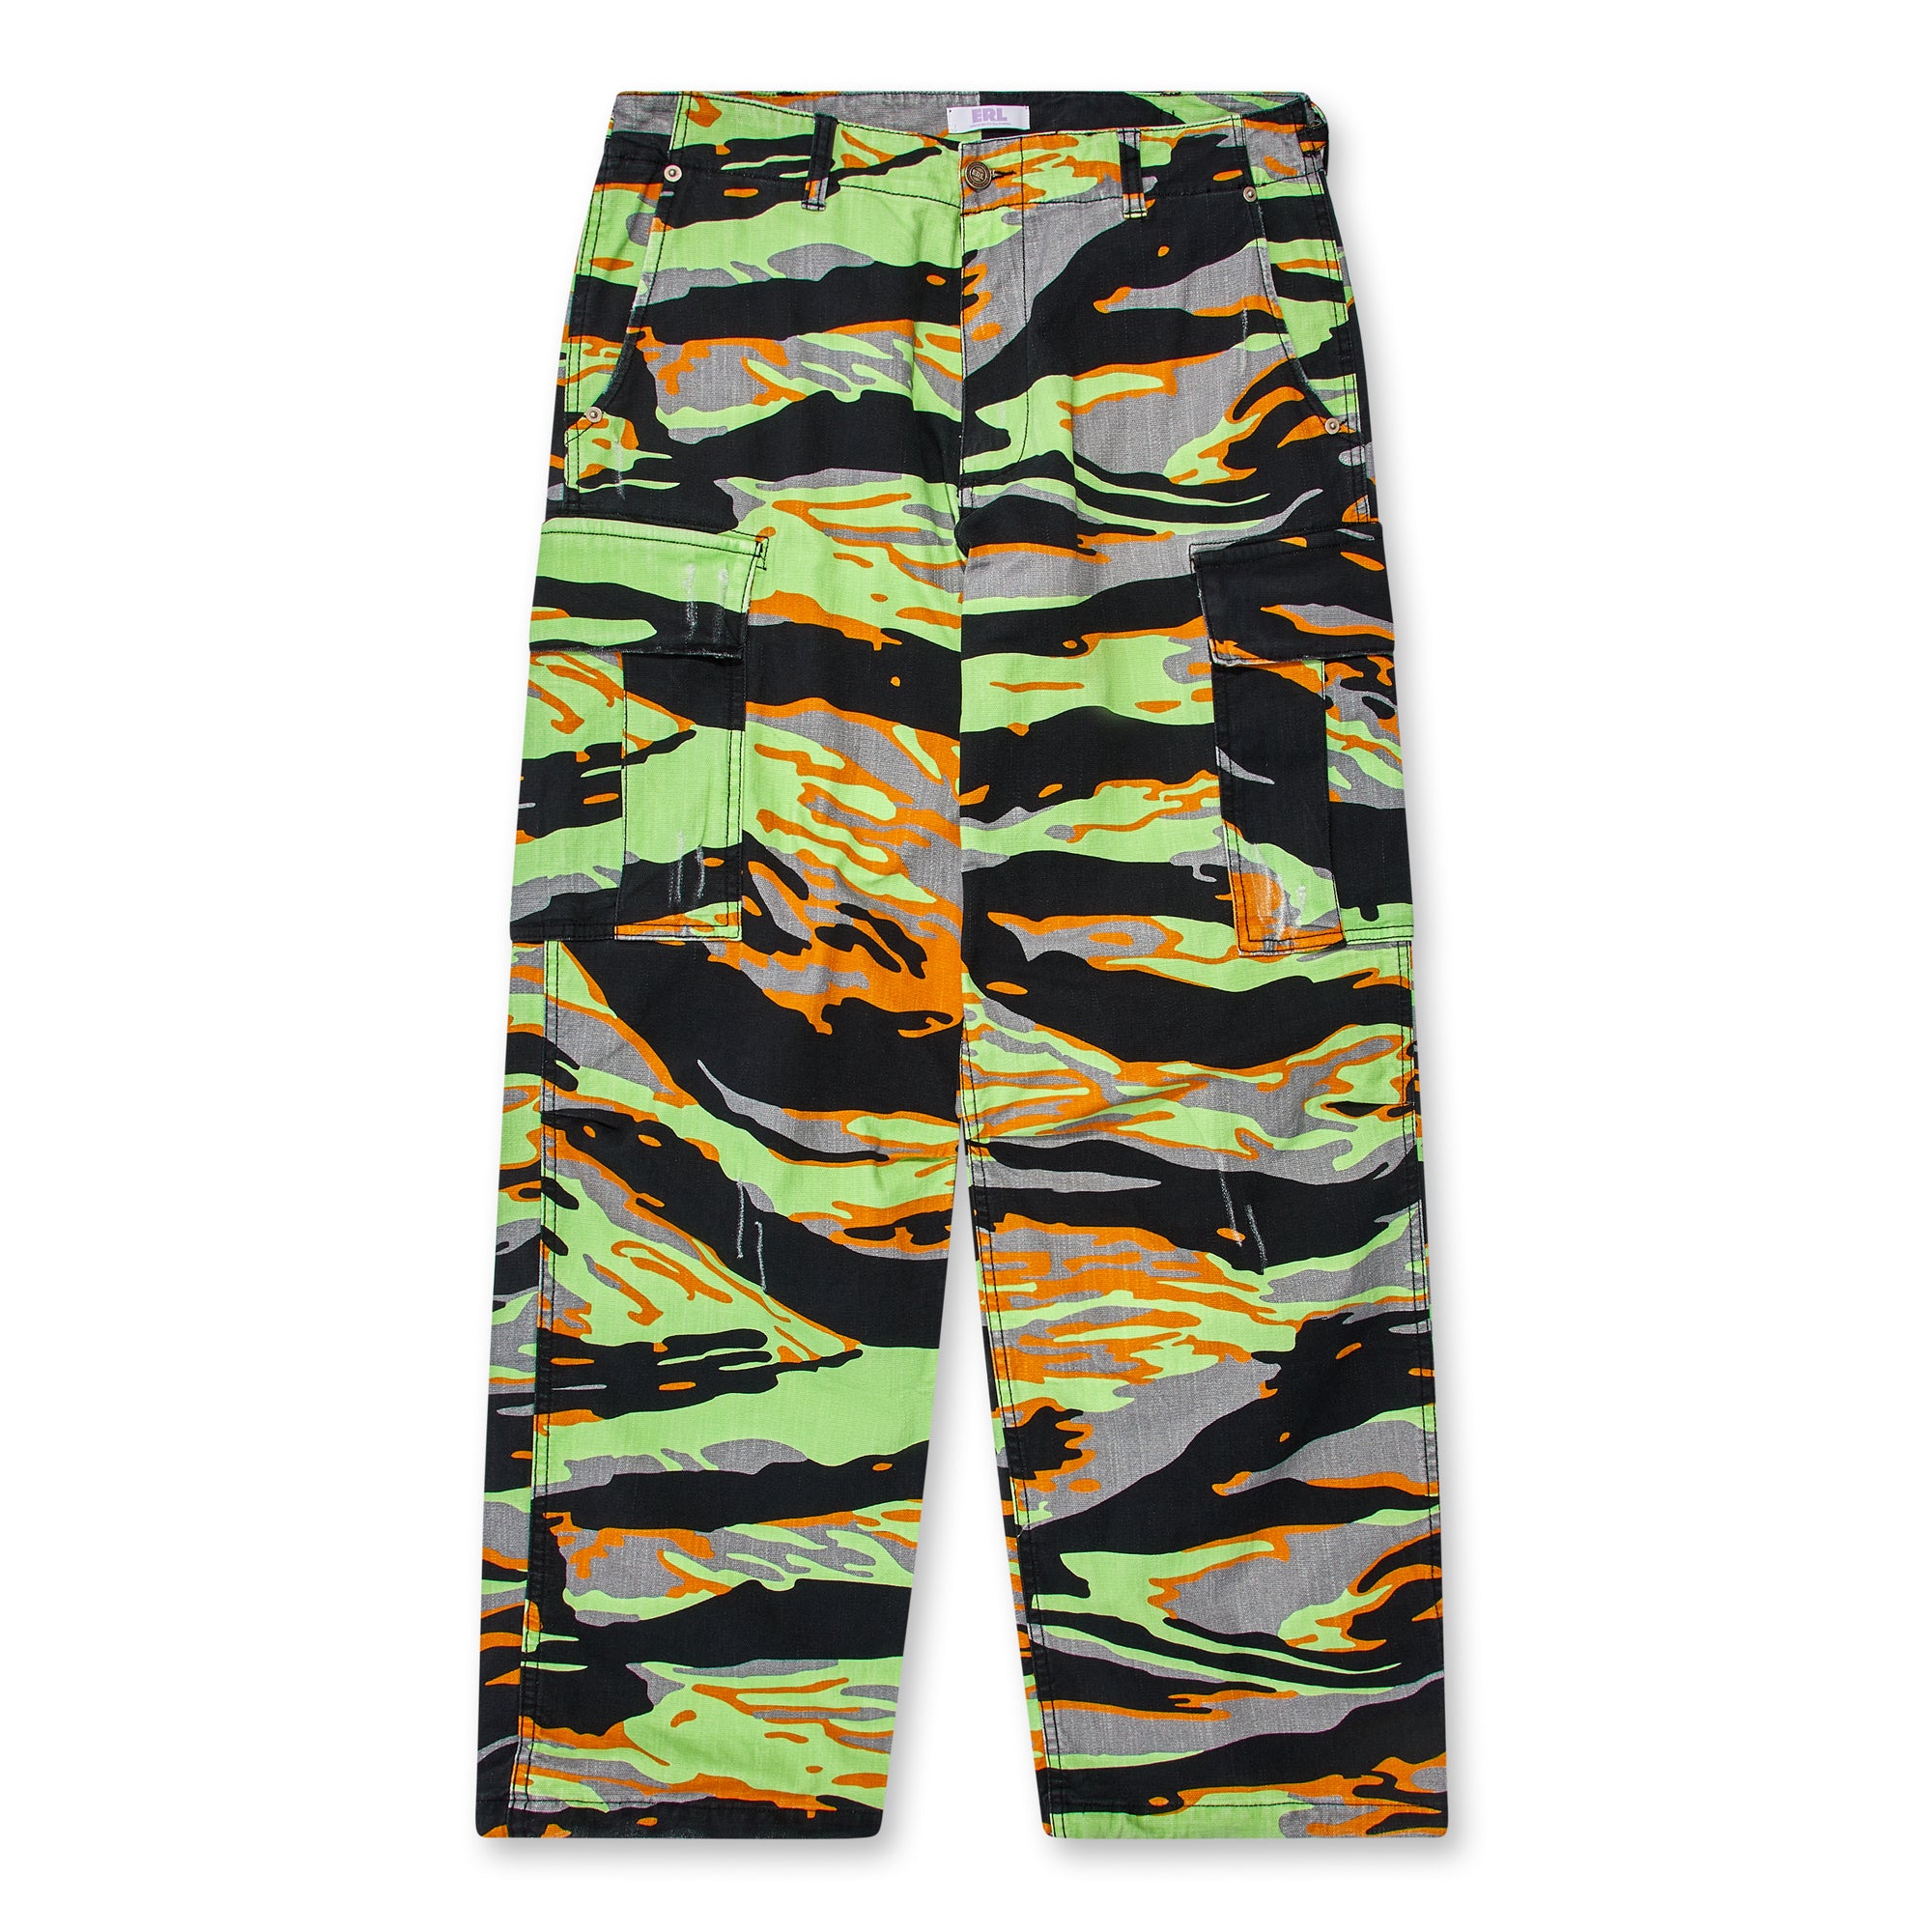 ERL - Men’s Printed Cargo Pants - (Green/Black) view 1